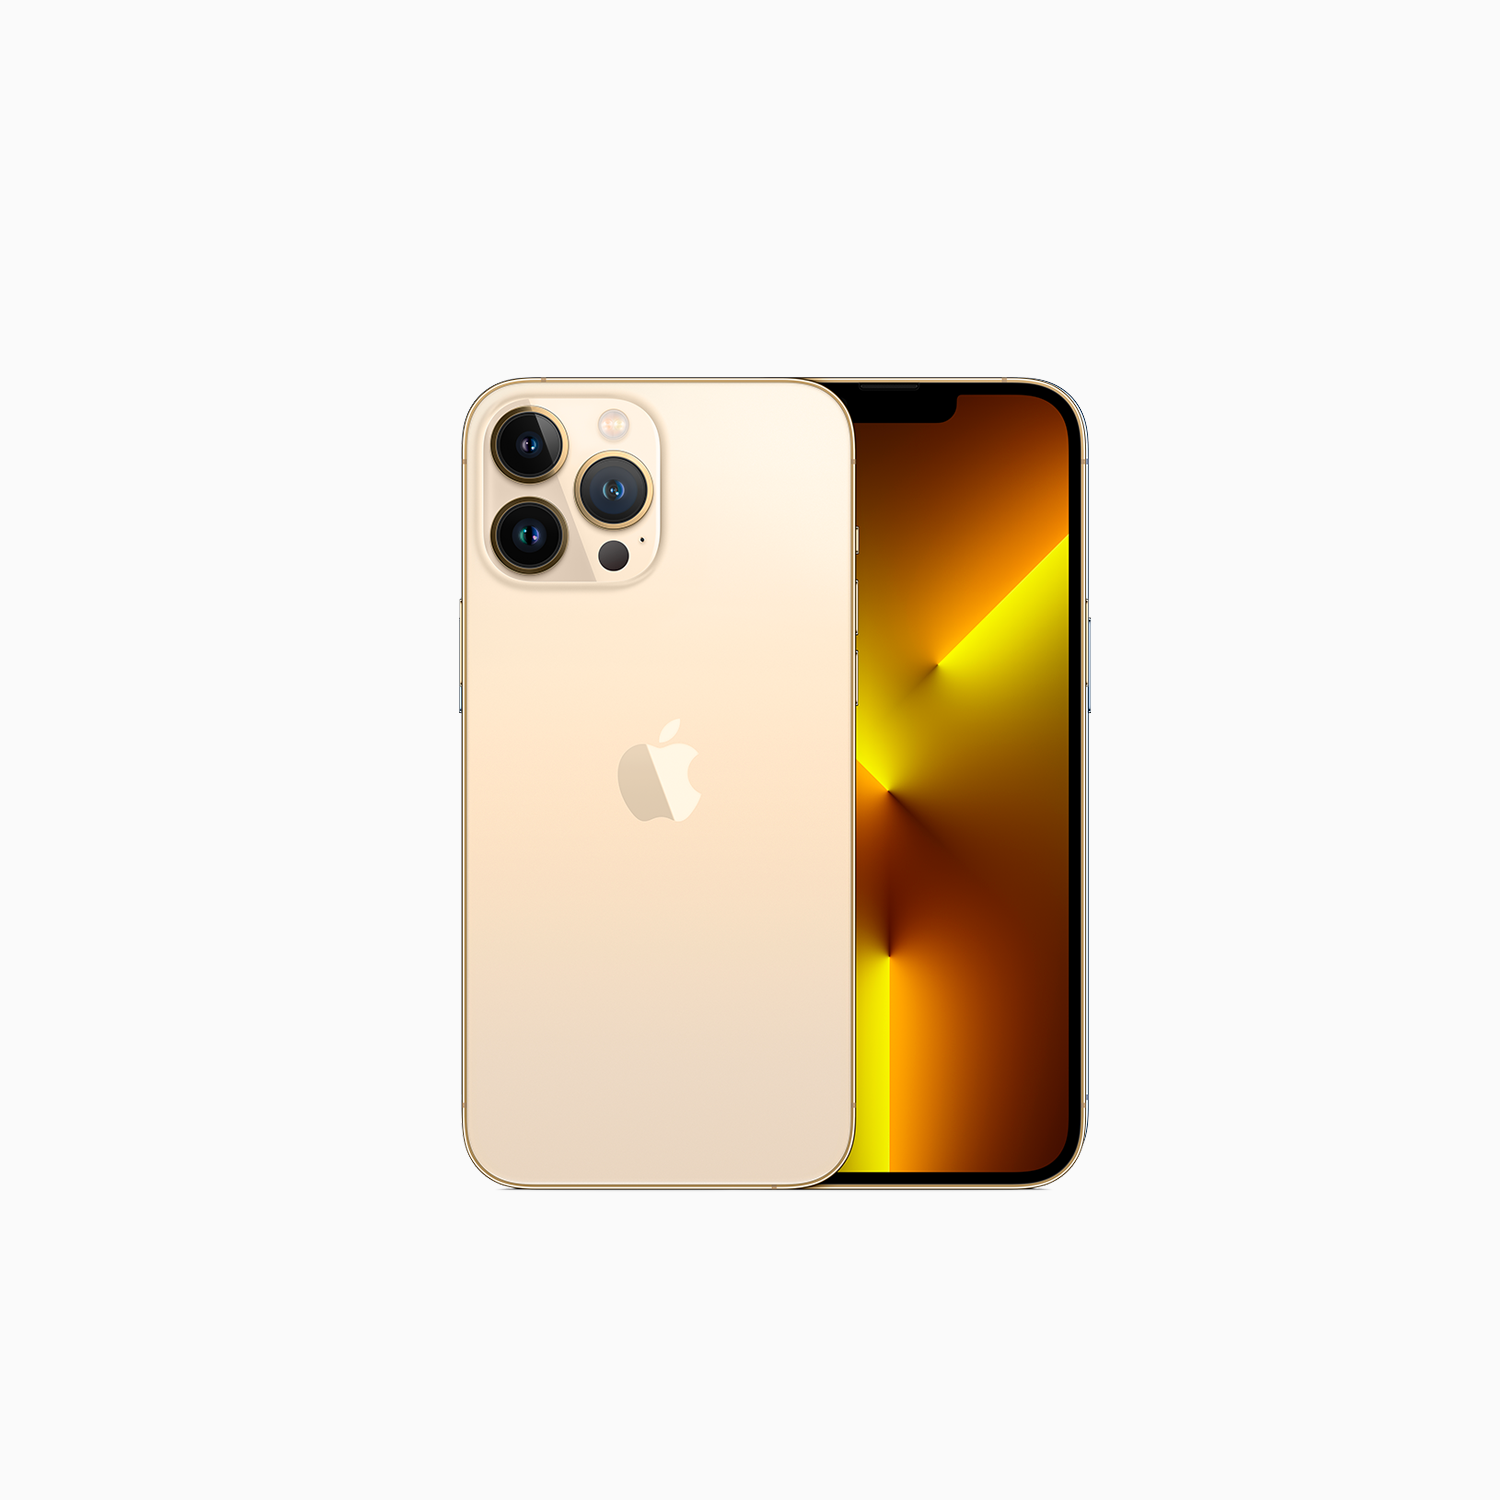 iPhone 13 pro gold